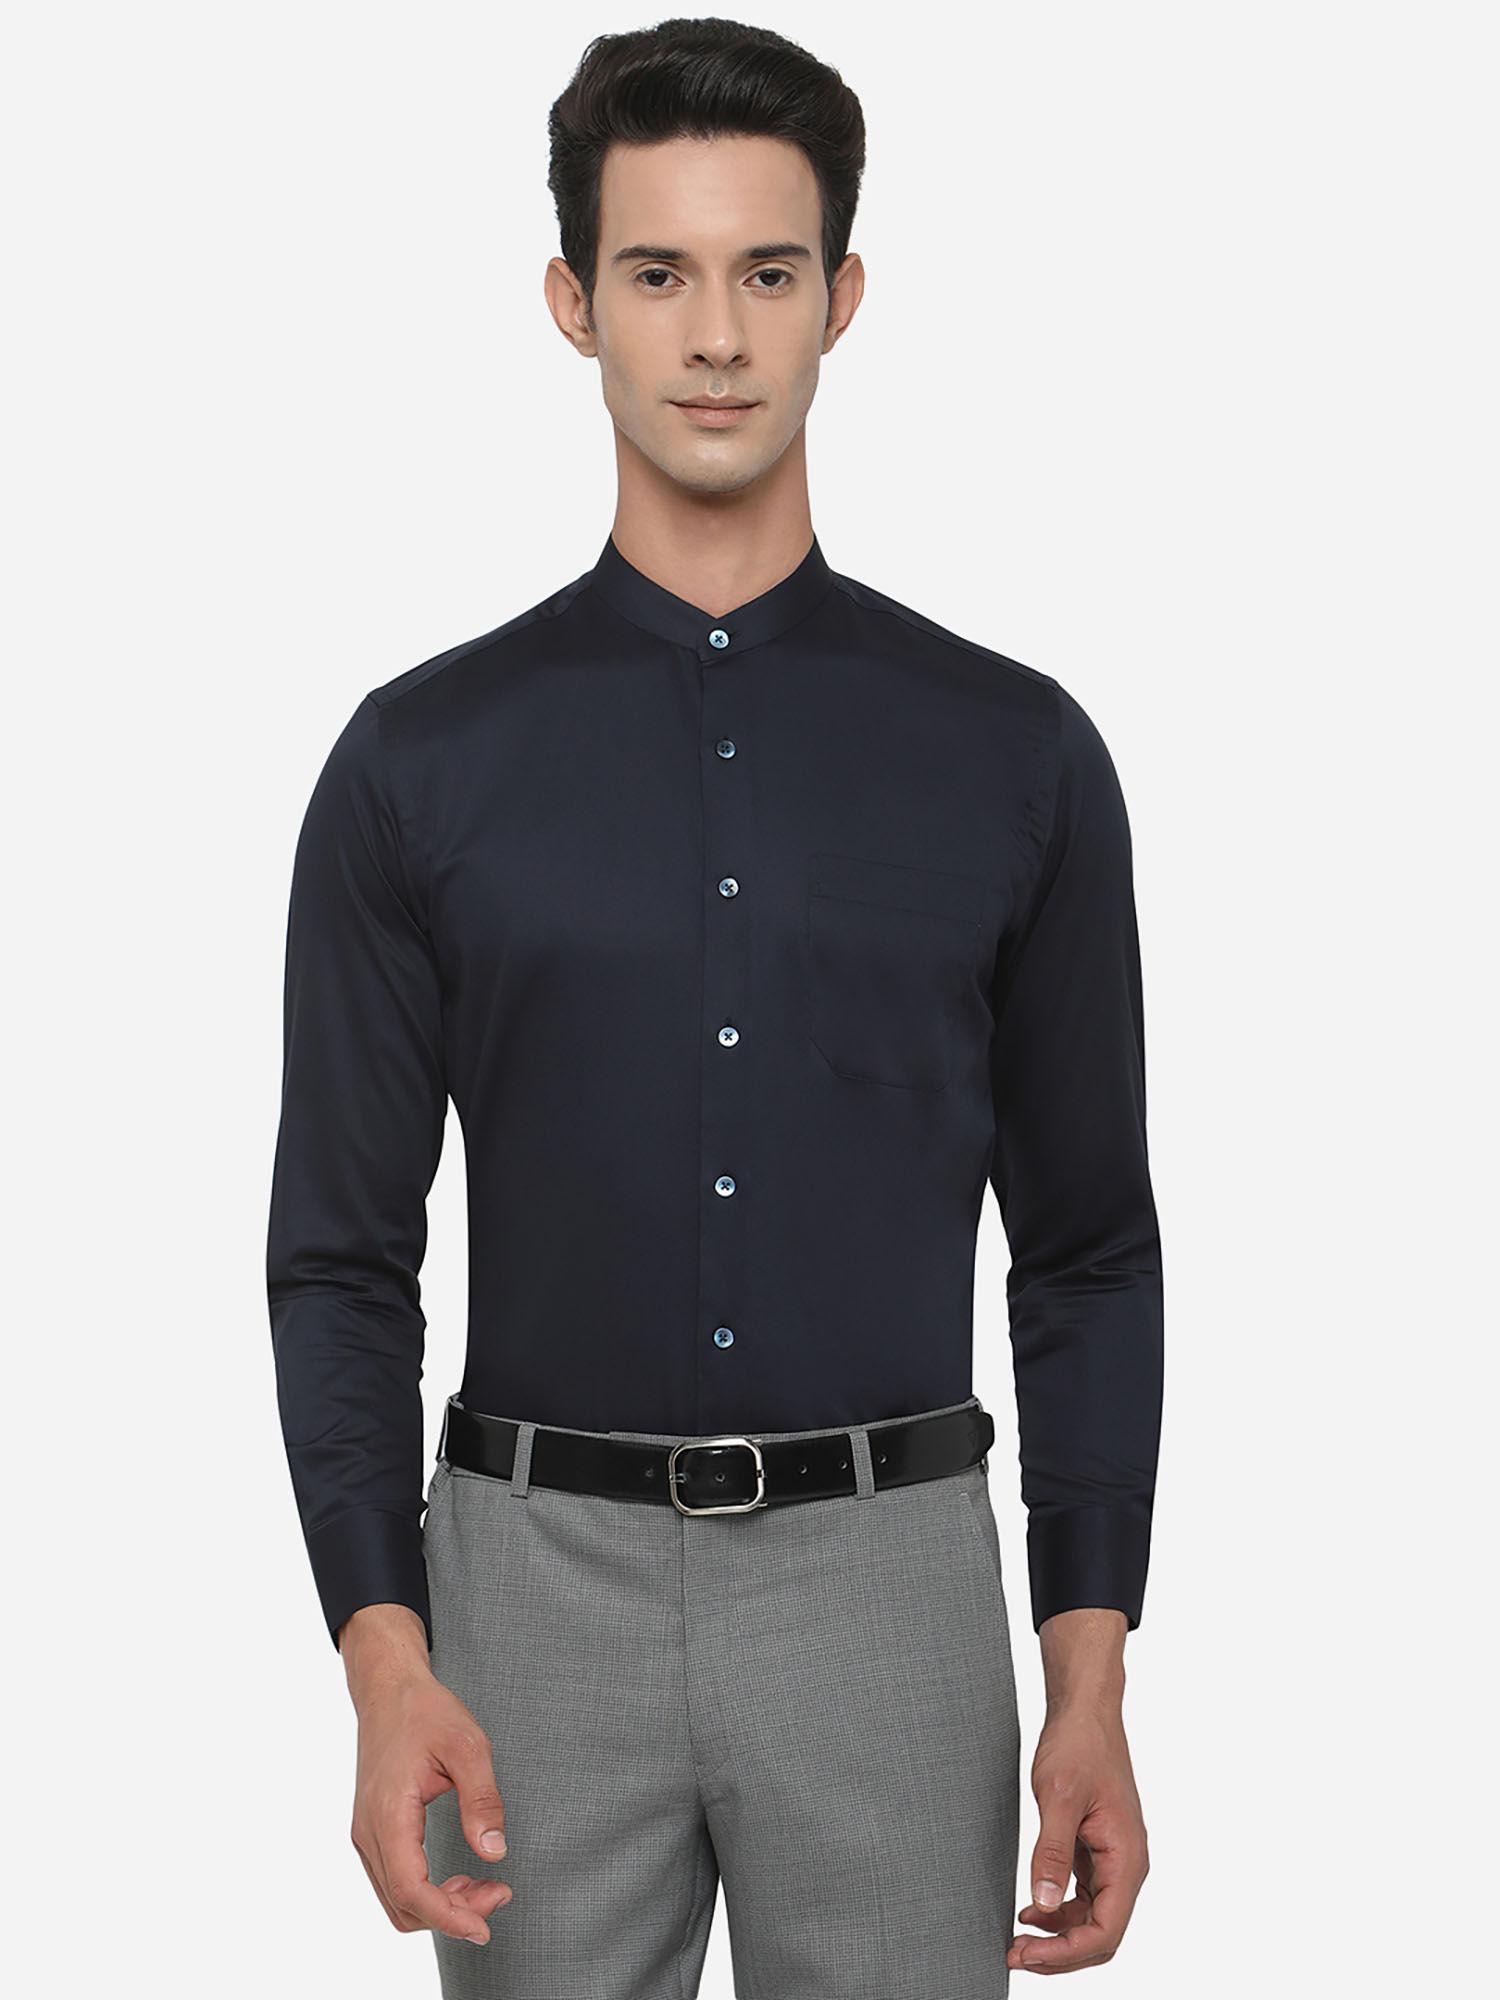 mens solid dark blue cotton slim fit formal shirt